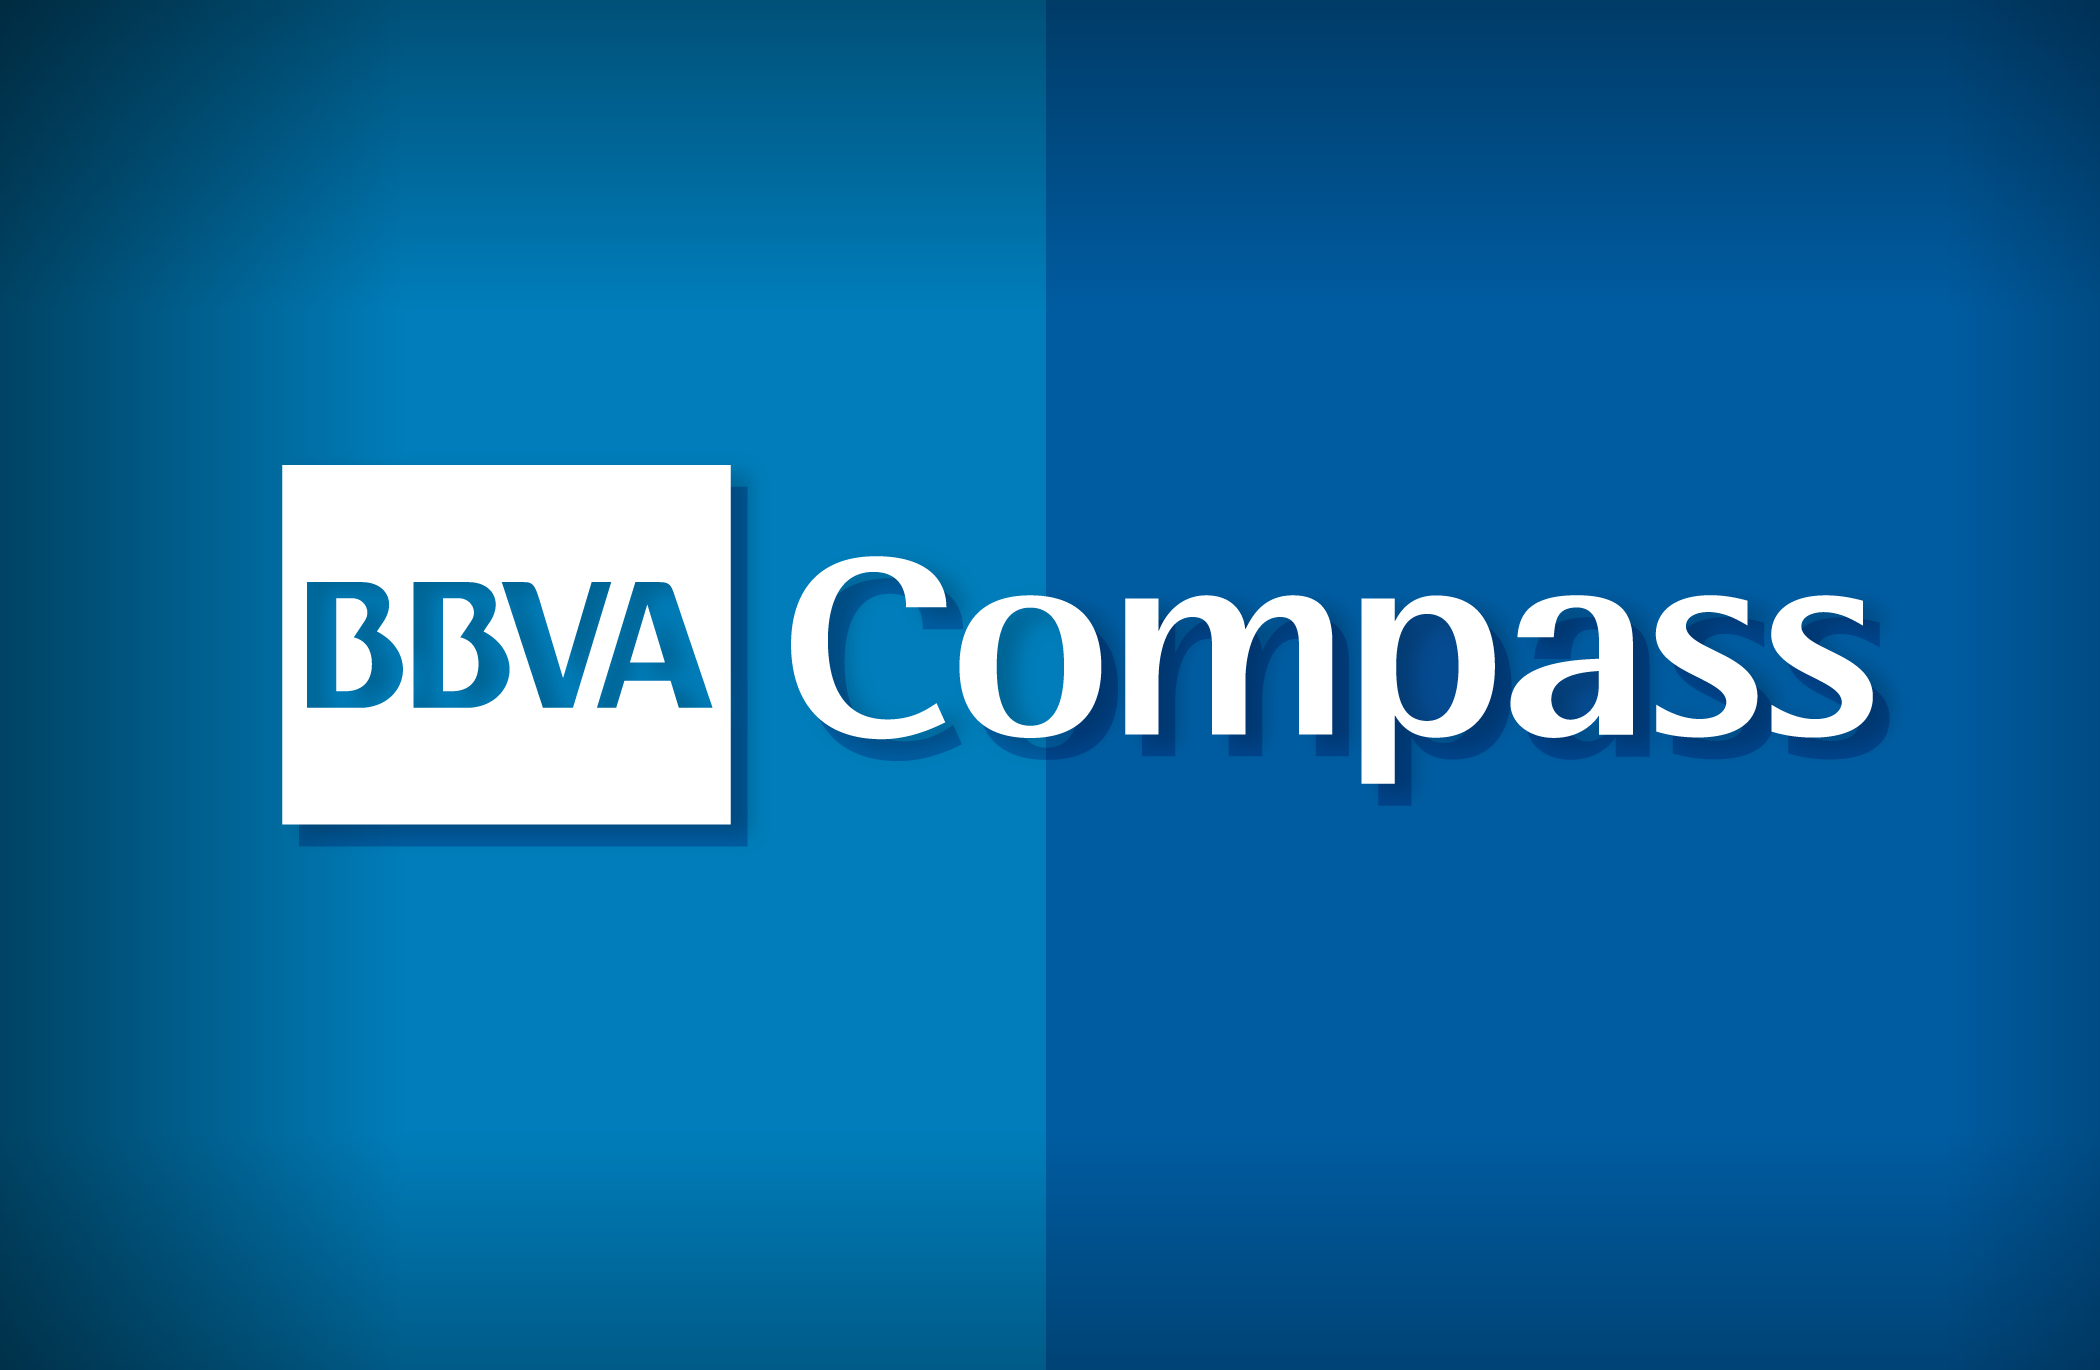 Best Mobile App: BBVA Compass